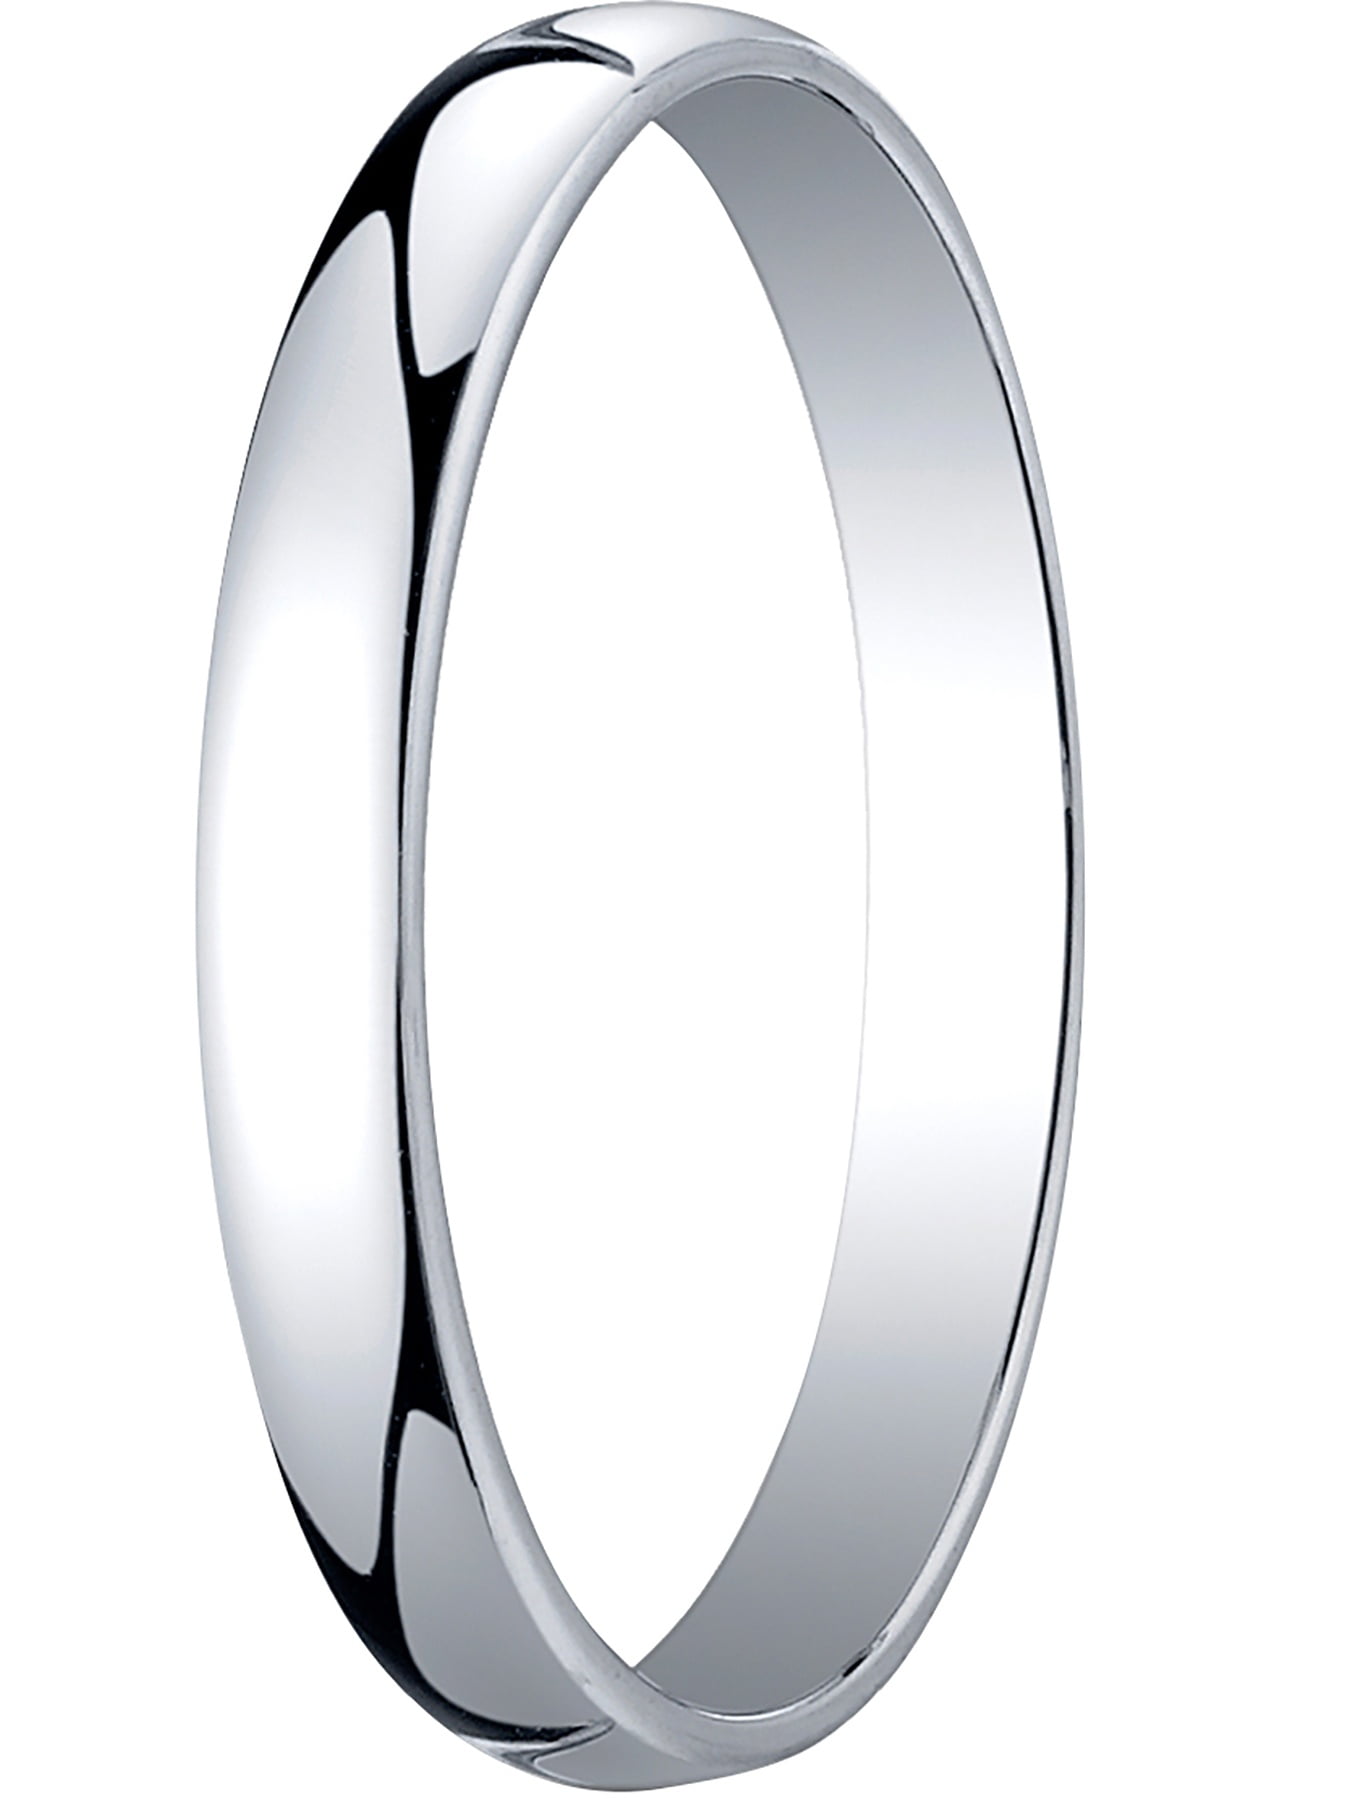 Benchmark 14K White Gold 2.5mm Slightly Domed Standard Comfort-Fit Wedding Band Ring Sizes 4-15 